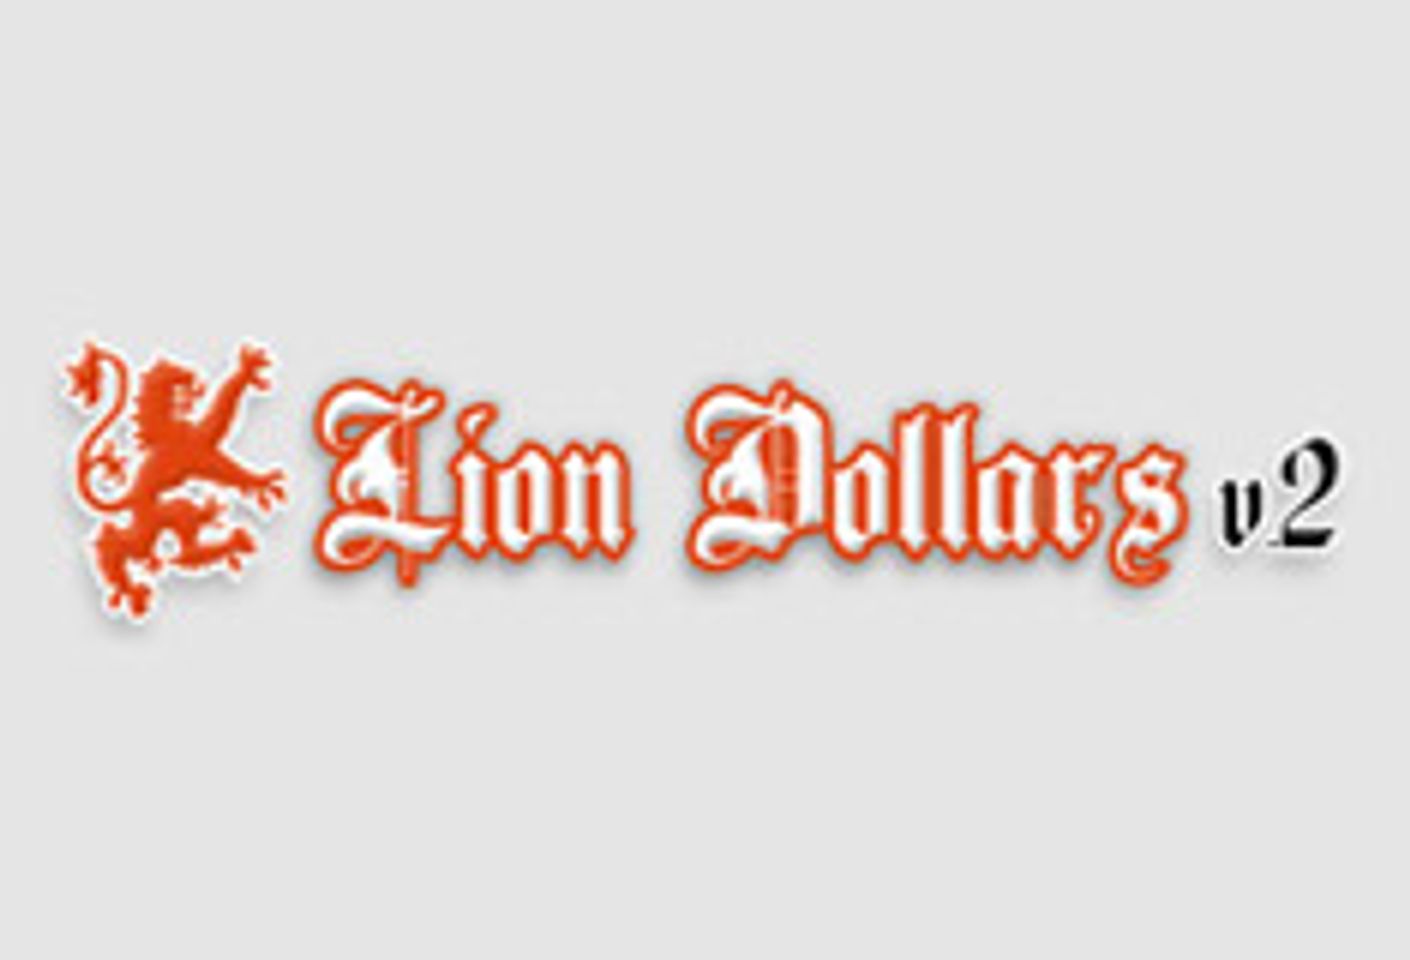 Lion Dollars Unveils Big Dick Site